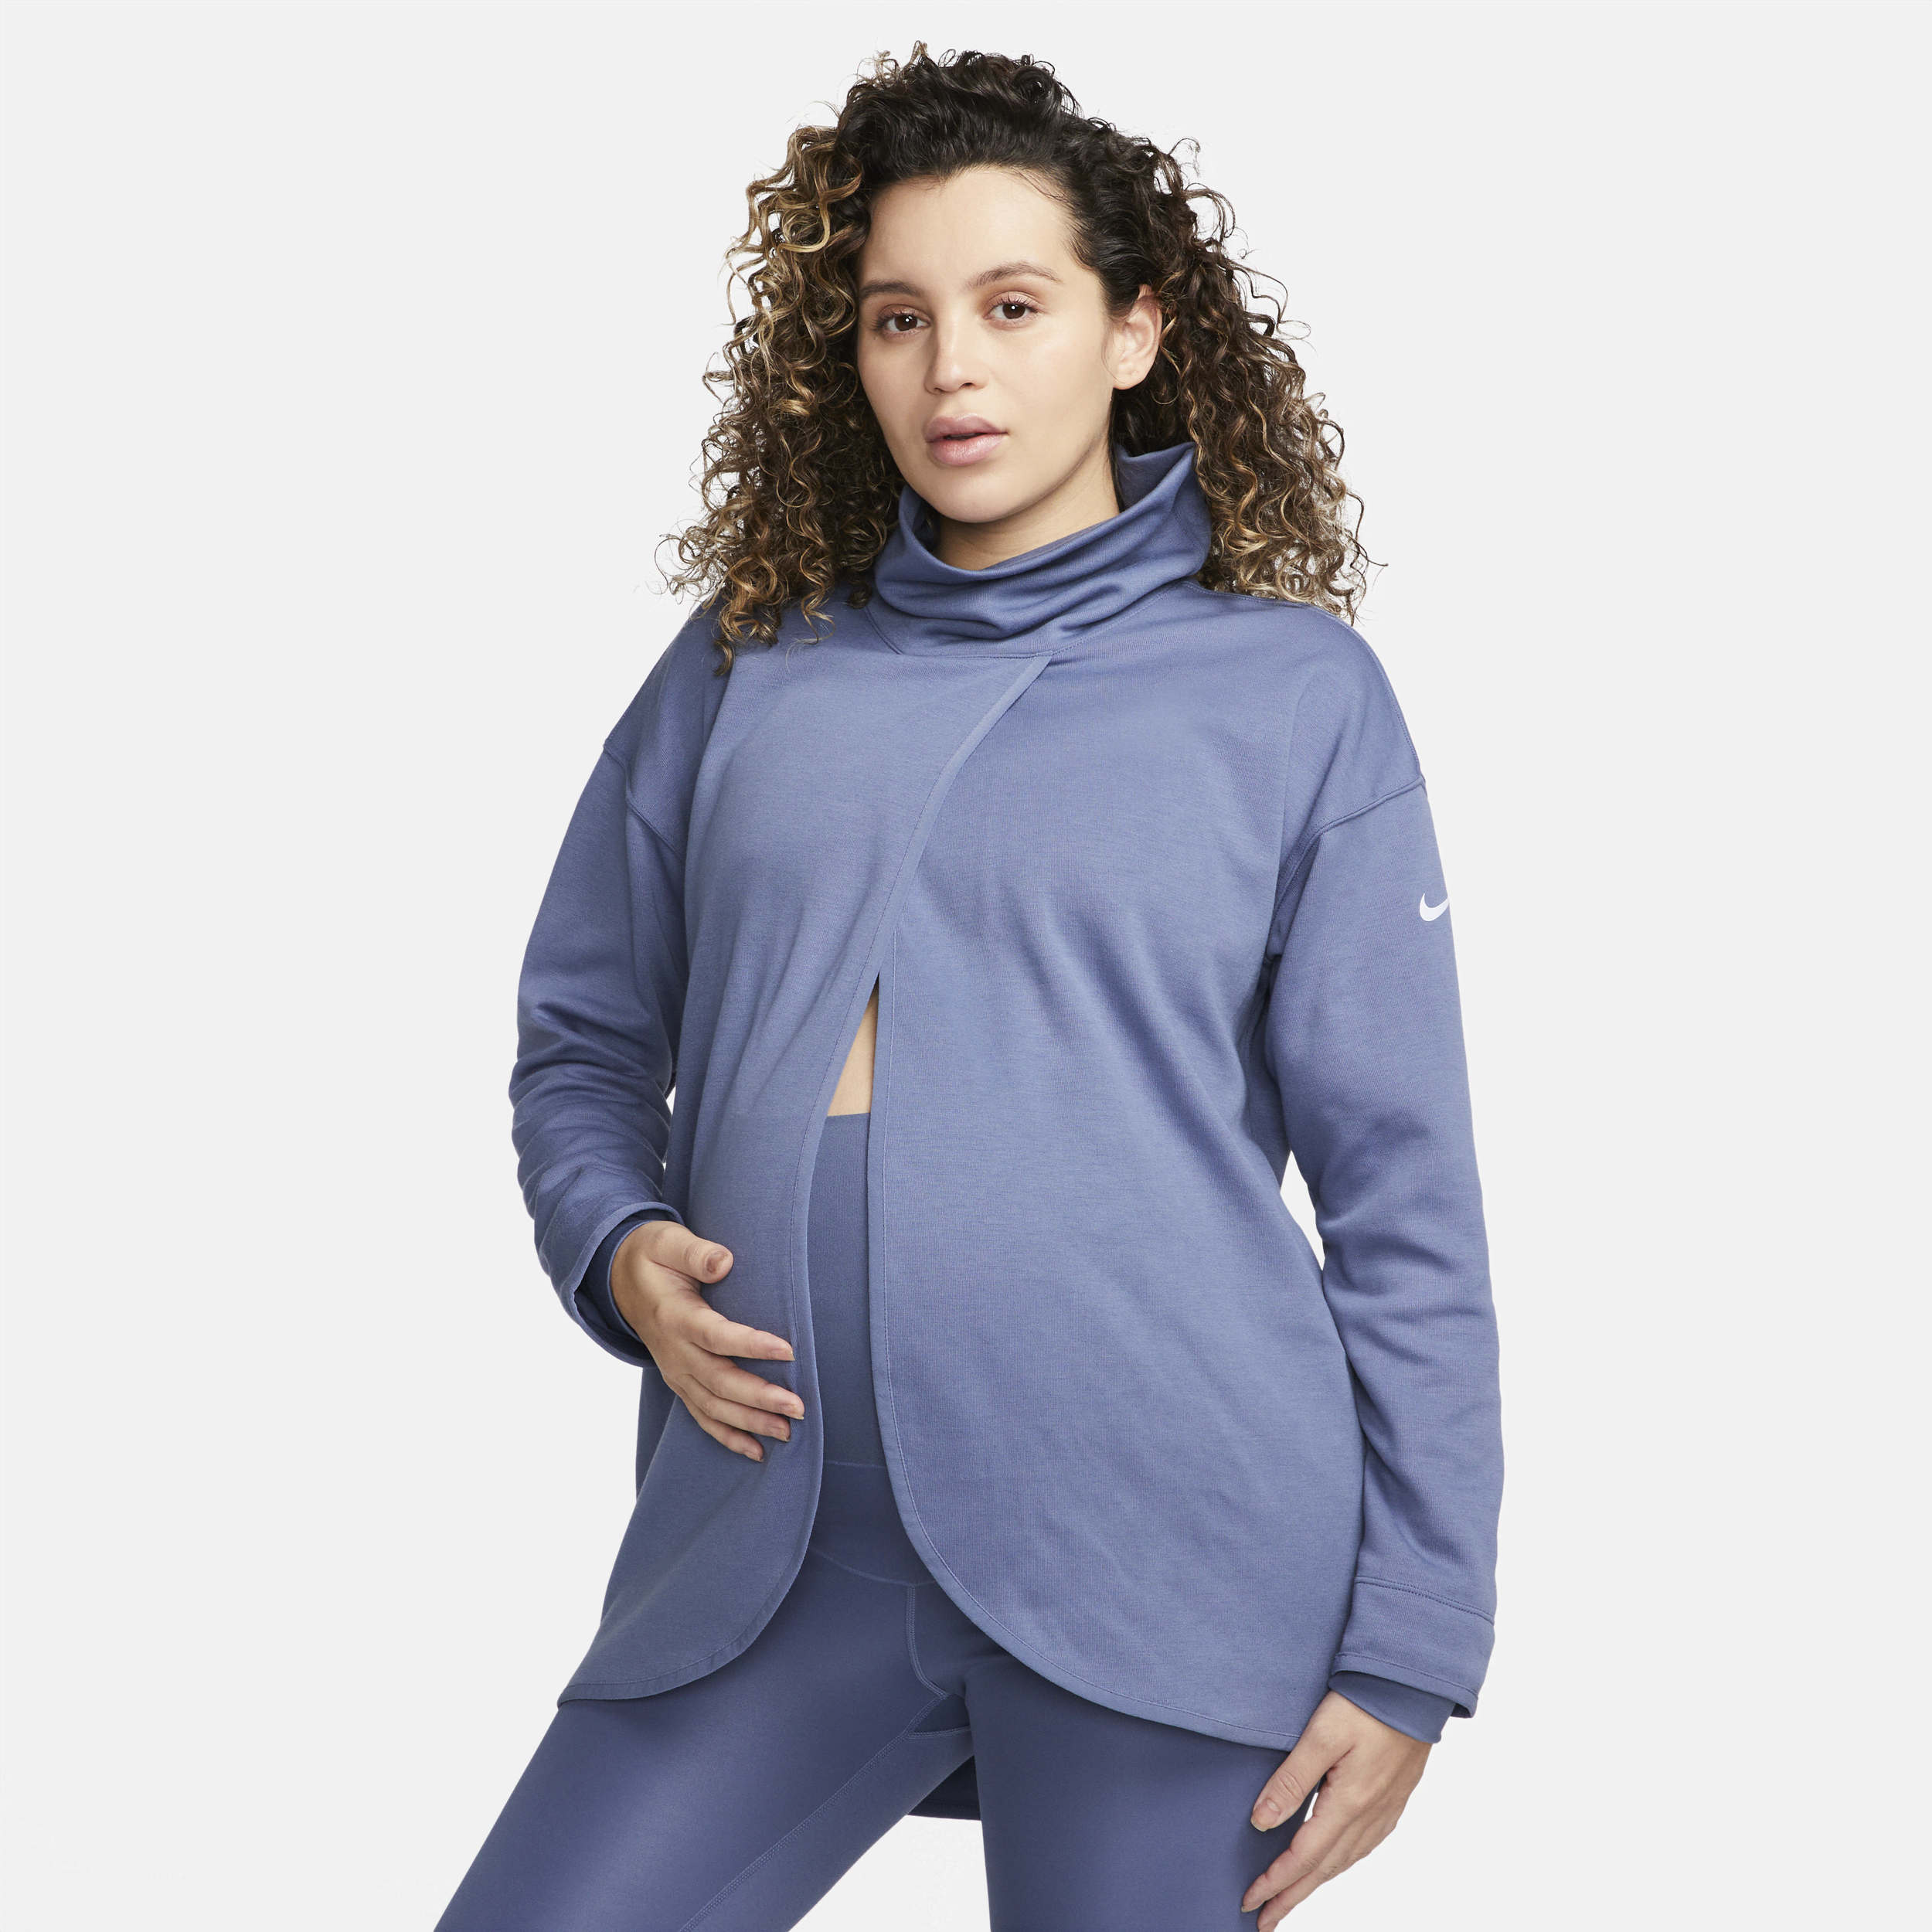 Maglia reversibile Nike (M) – Donna (maternità) - Blu